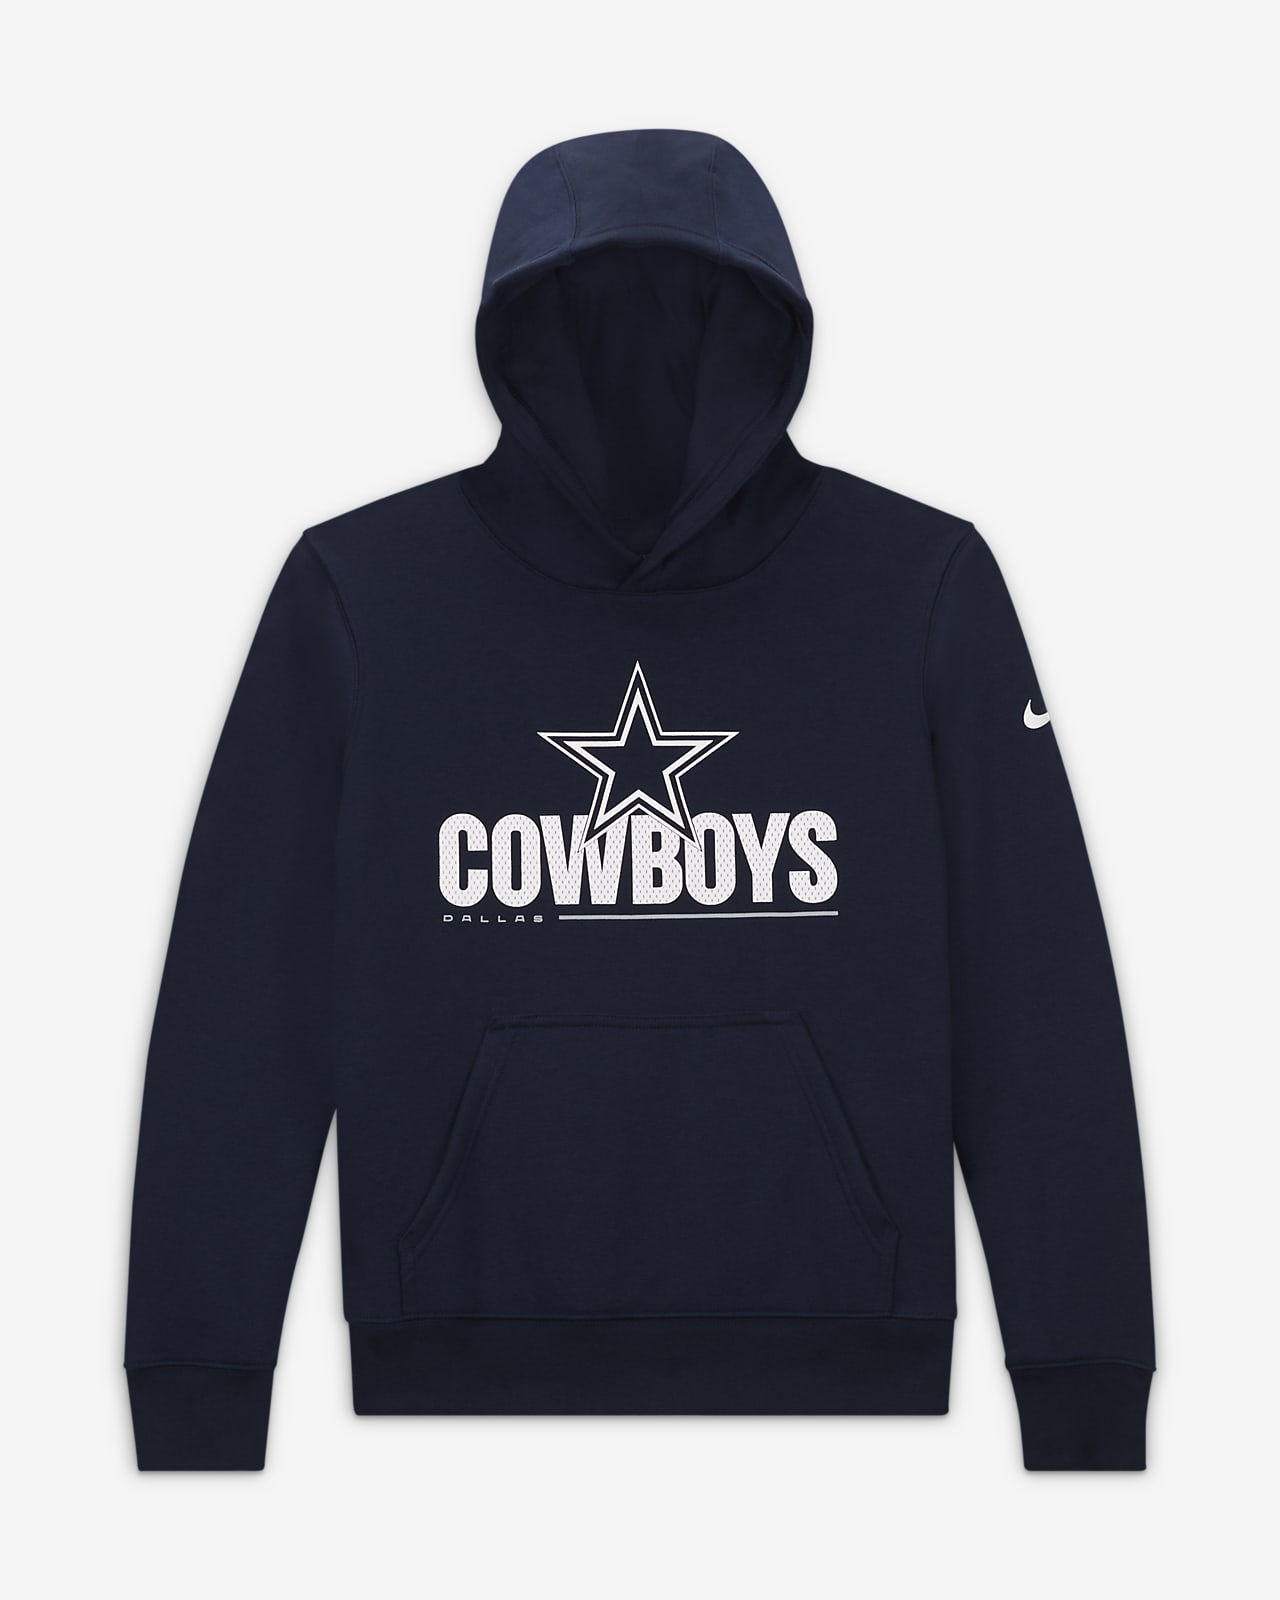 nike cowboys sweatshirt